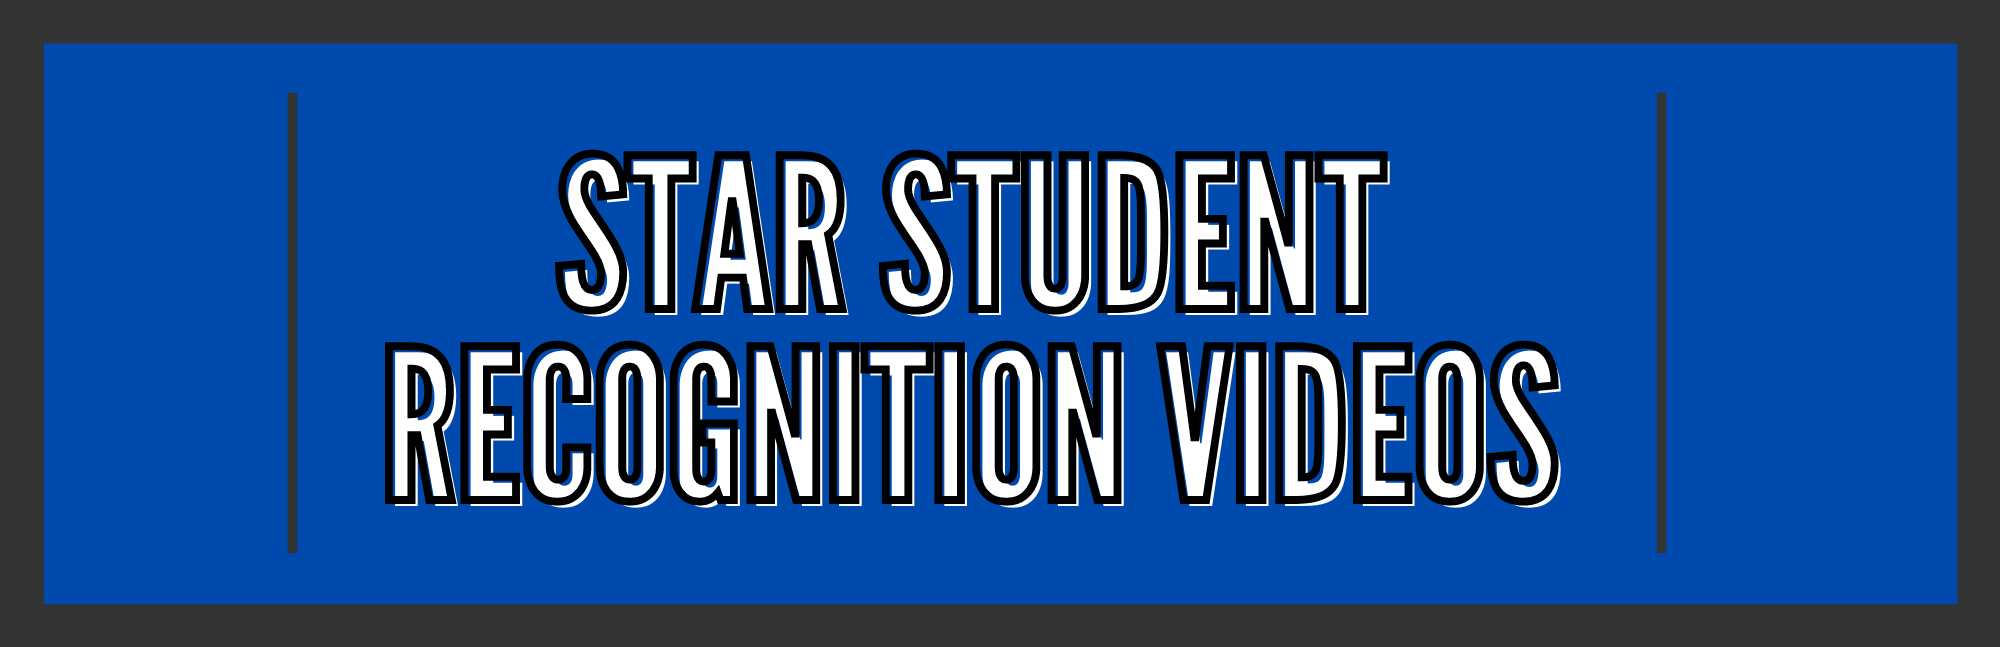 Star Student Videos